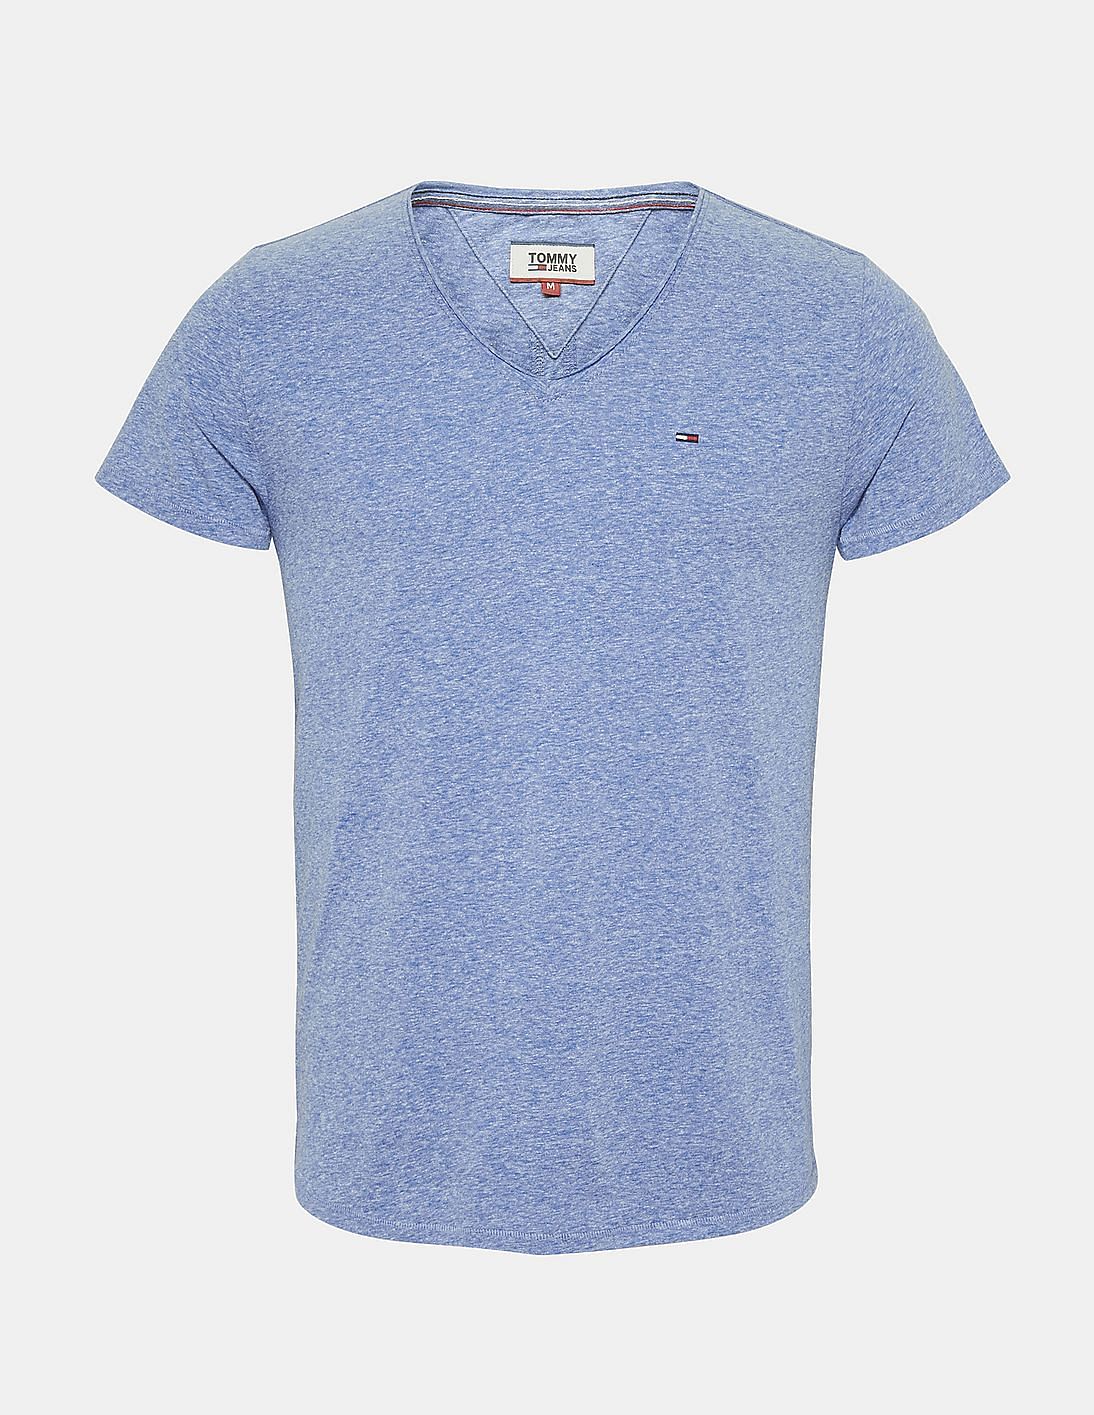 Buy Tommy Hilfiger Men Light Blue V-Neck Heathered T-Shirt - NNNOW.com